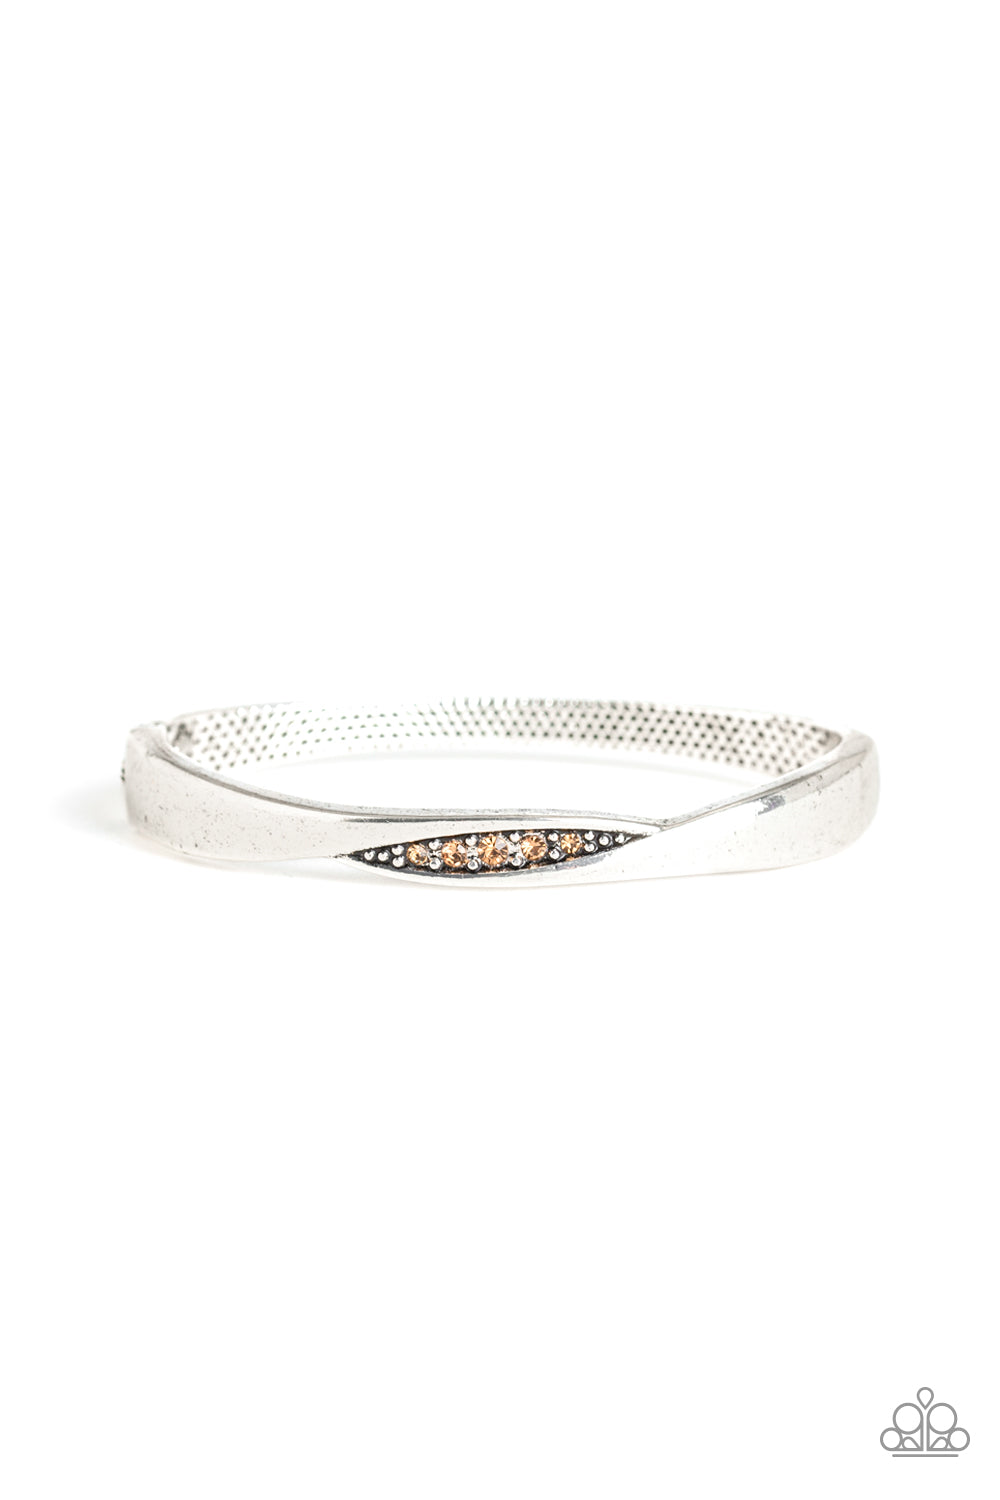 Paparazzi Glittering Grit - Brown - Golden Topaz Rhinestones - Hinged Bracelet - $5 Jewelry With Ashley Swint